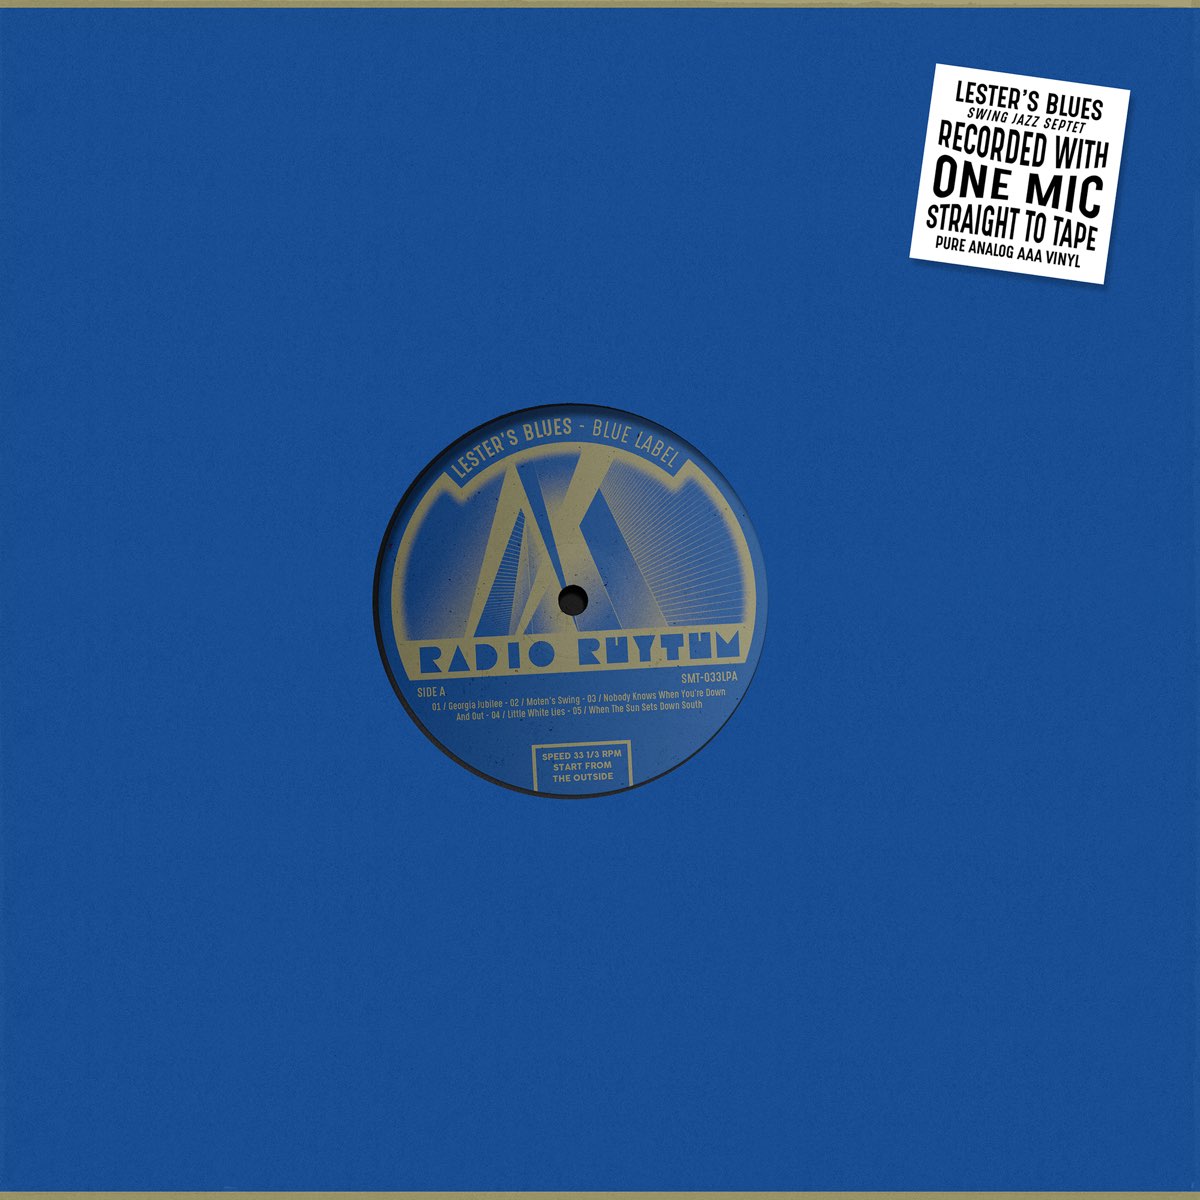 Blue Label: Radio Rhythm - Album by Lester's Blues - Apple Music